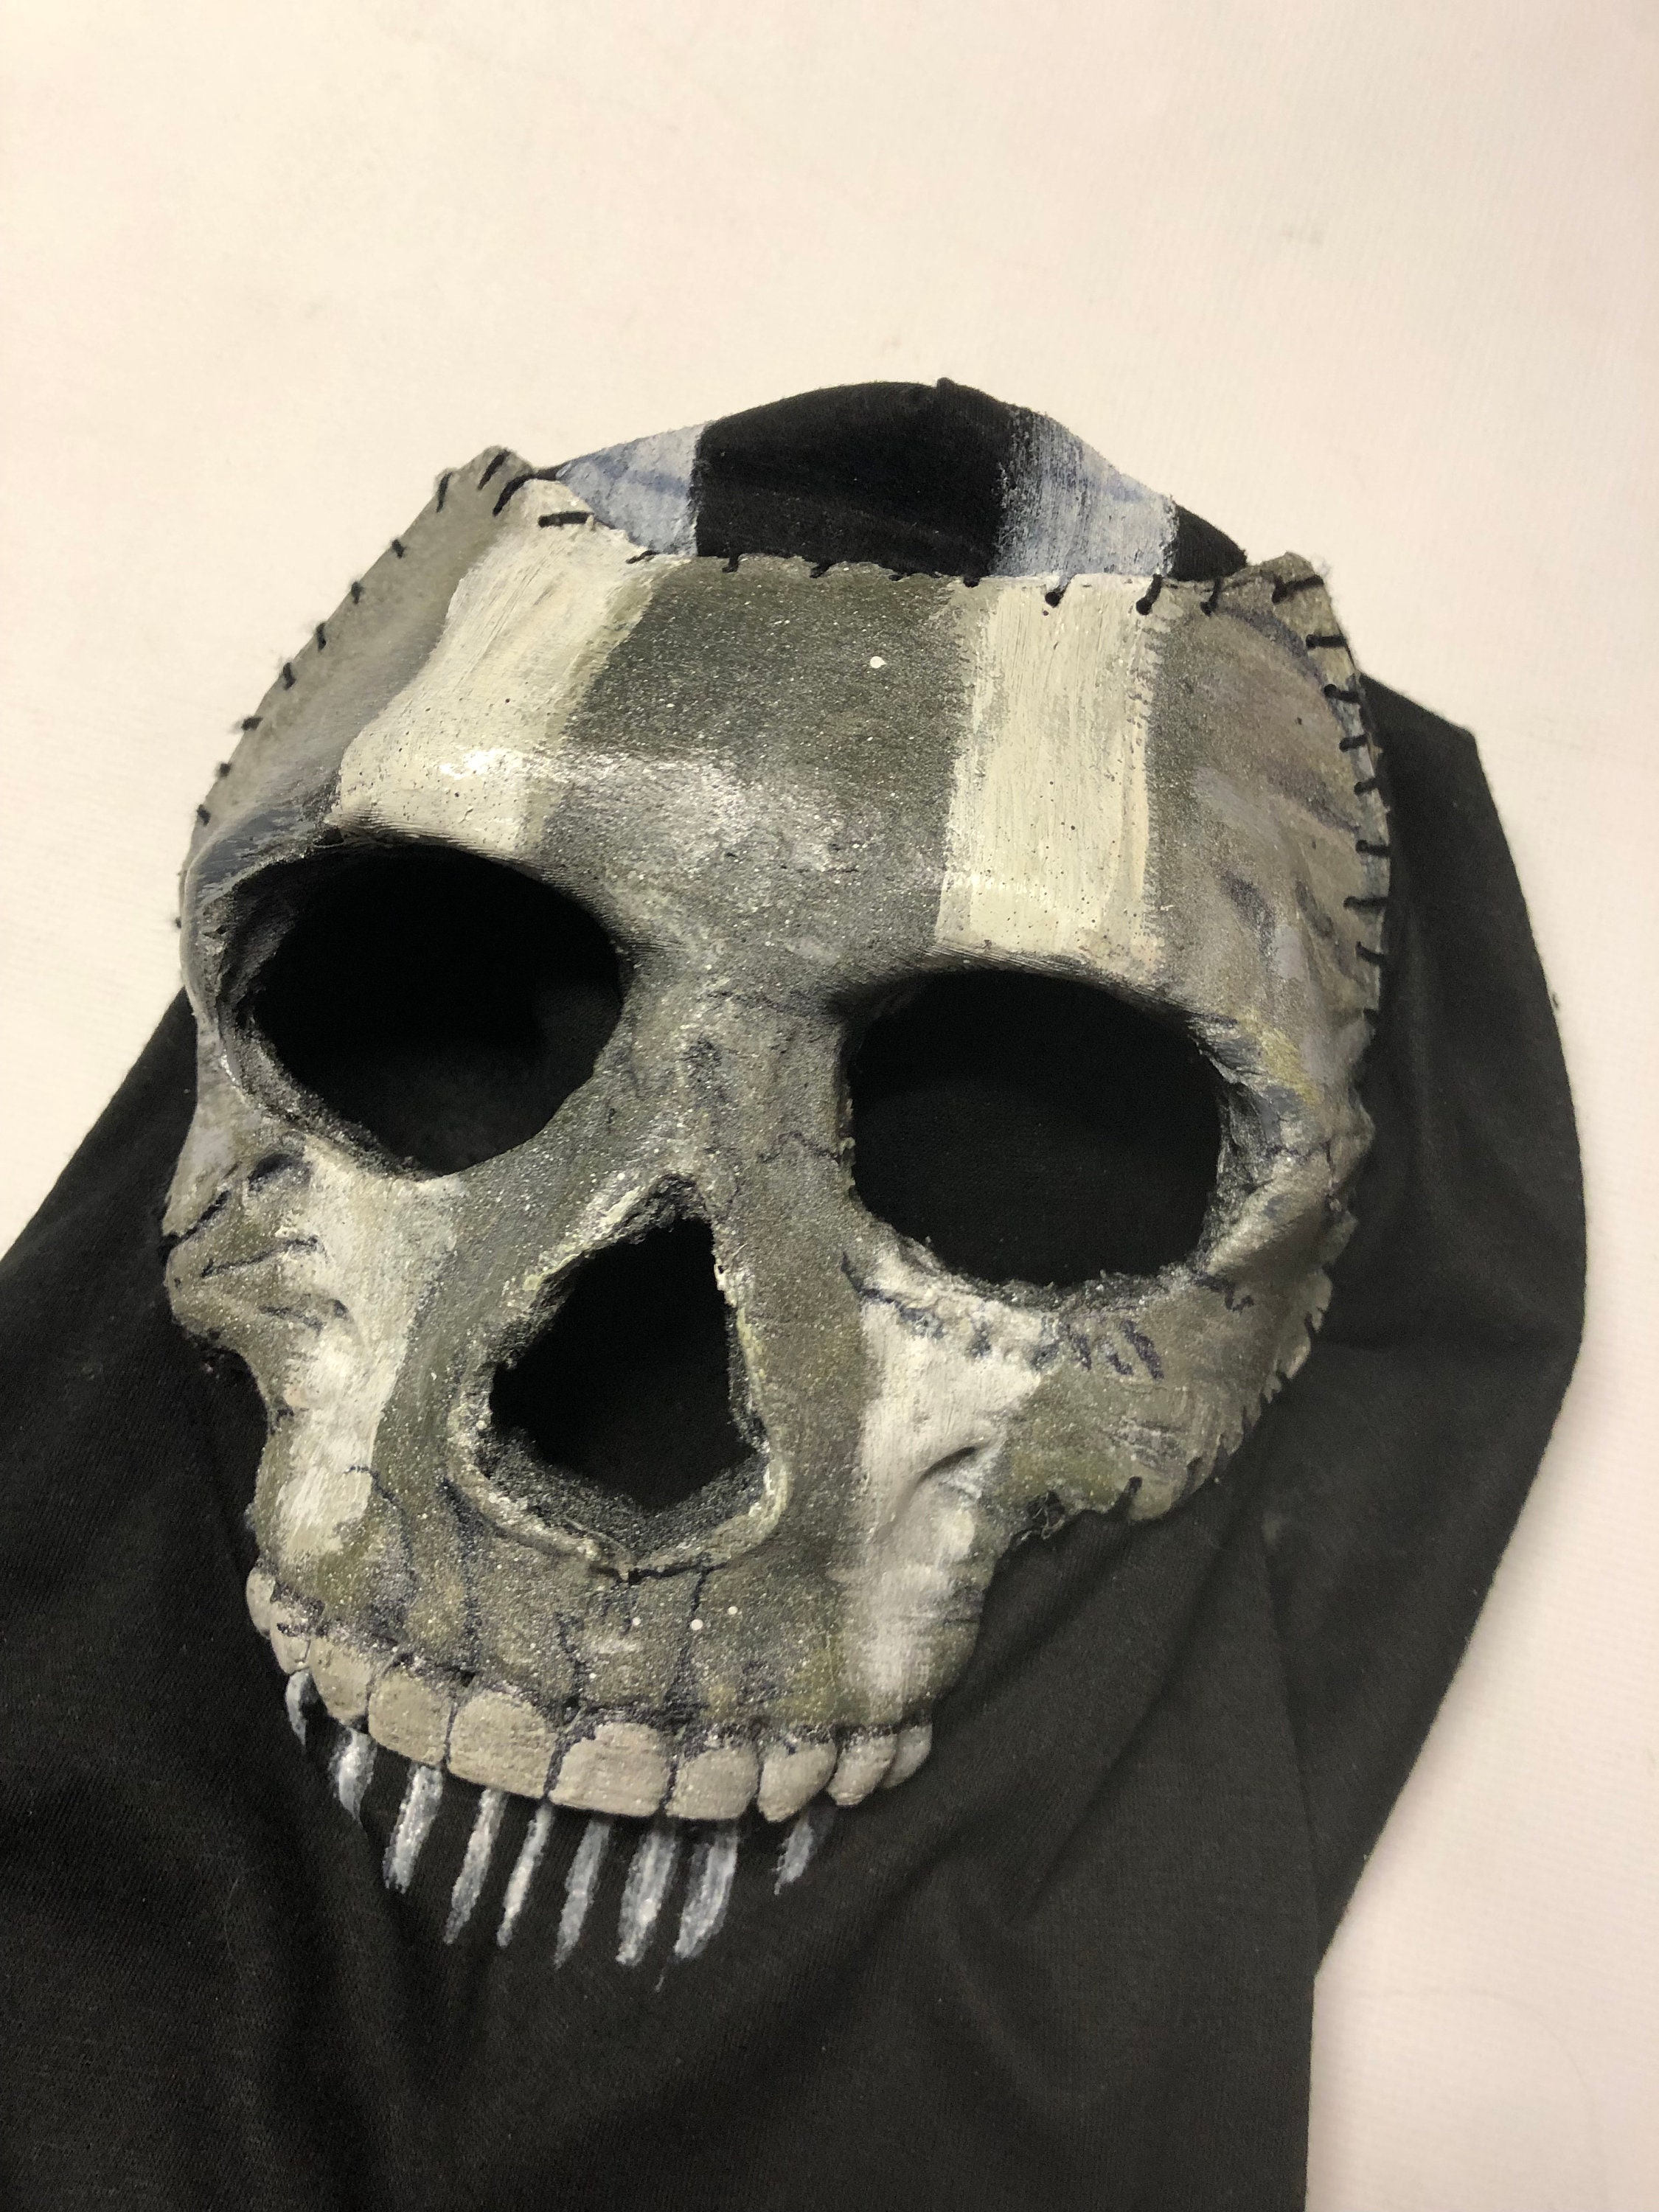 Ghost Mask inspired by Call of Duty Modern Warfare , MW2 V2 skull mask